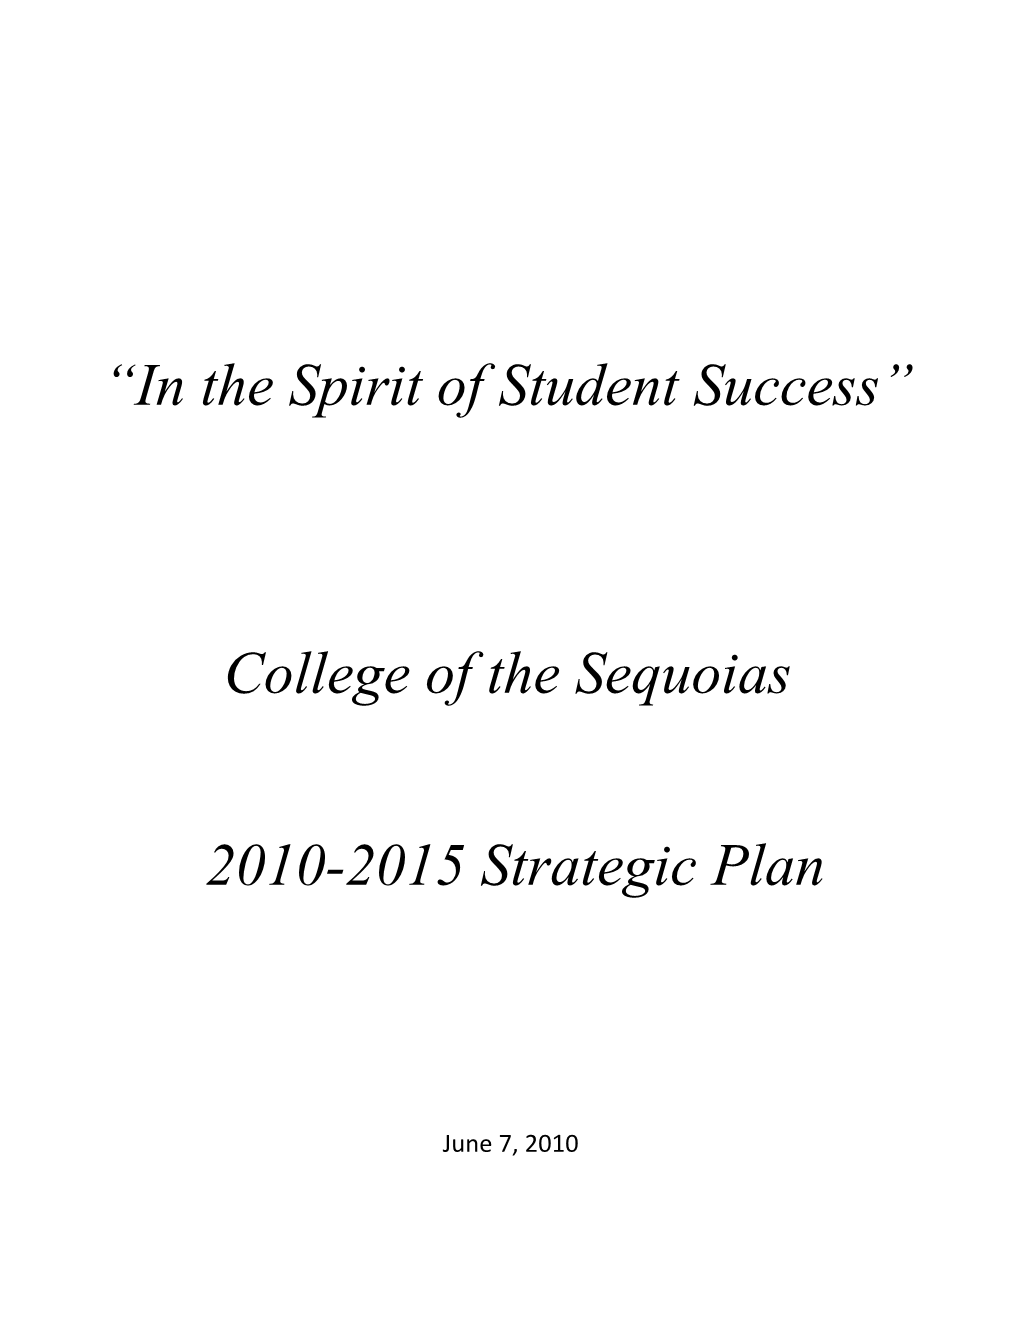 In the Spirit of Student Success, College of the Sequoias 2010-2015 Strategic Plan